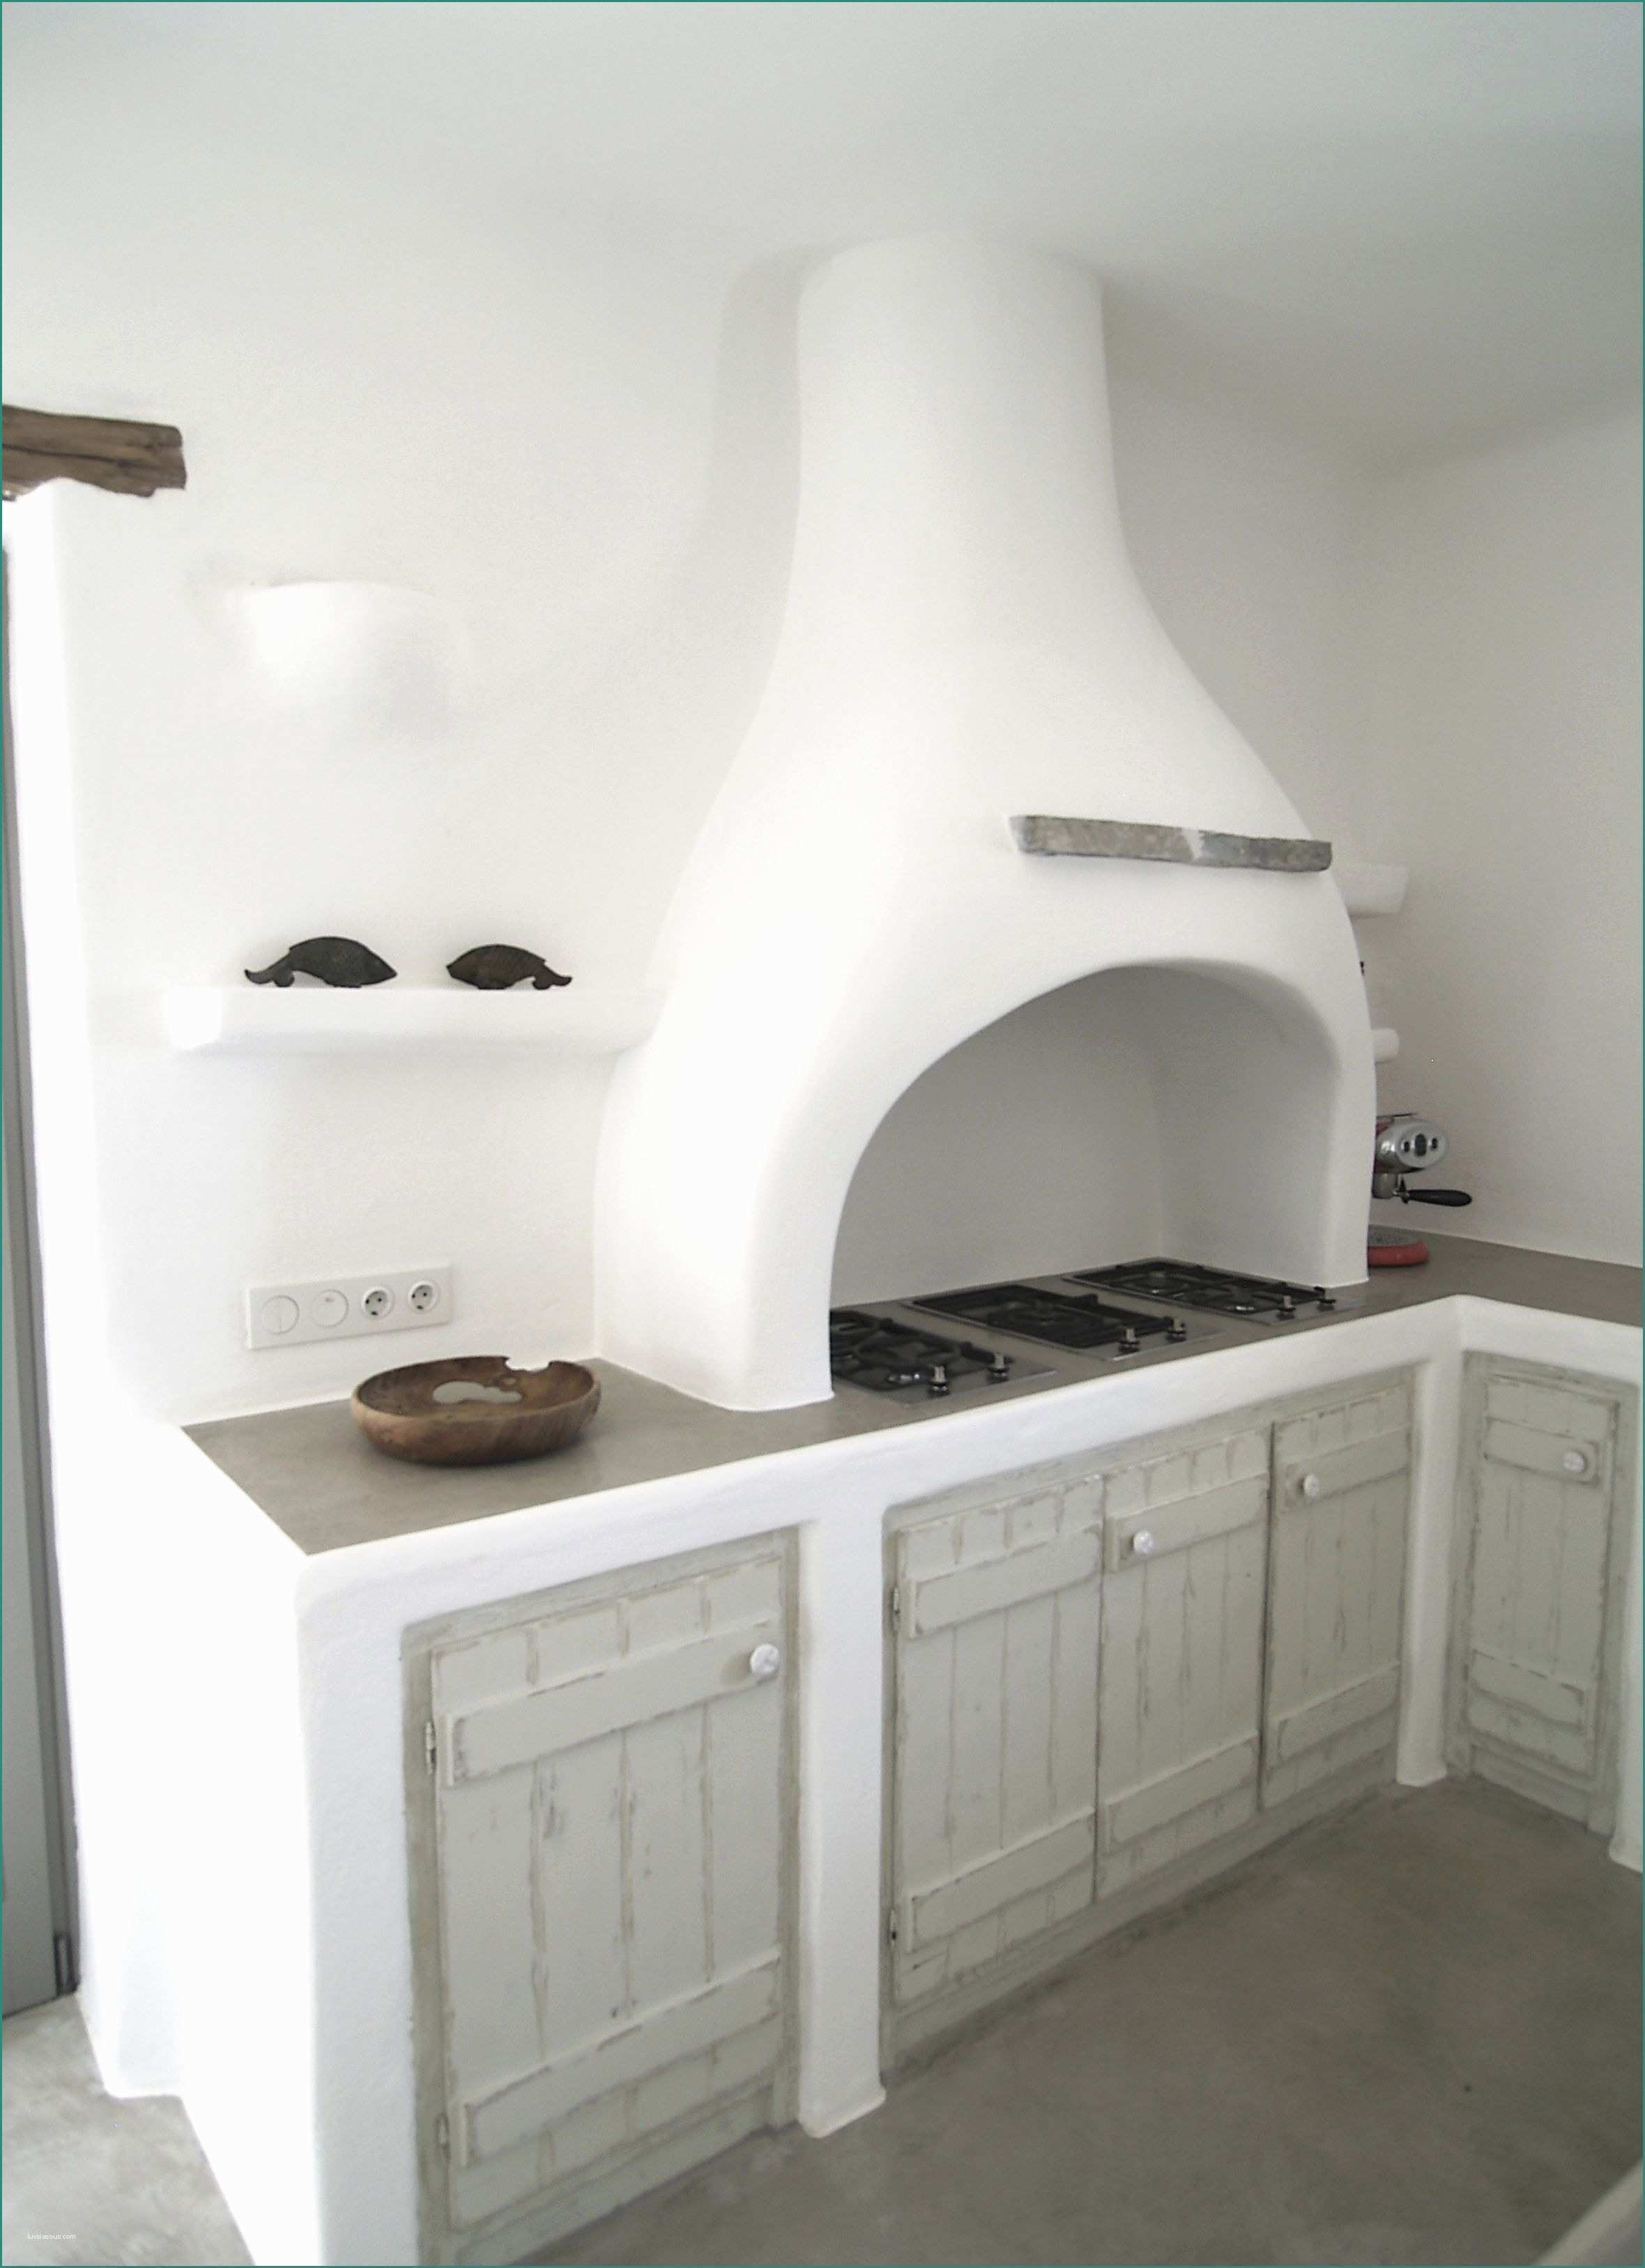 Prezzi Cucine Moderne E Paros Greece Traditional Built Kitchen Counter and Hood